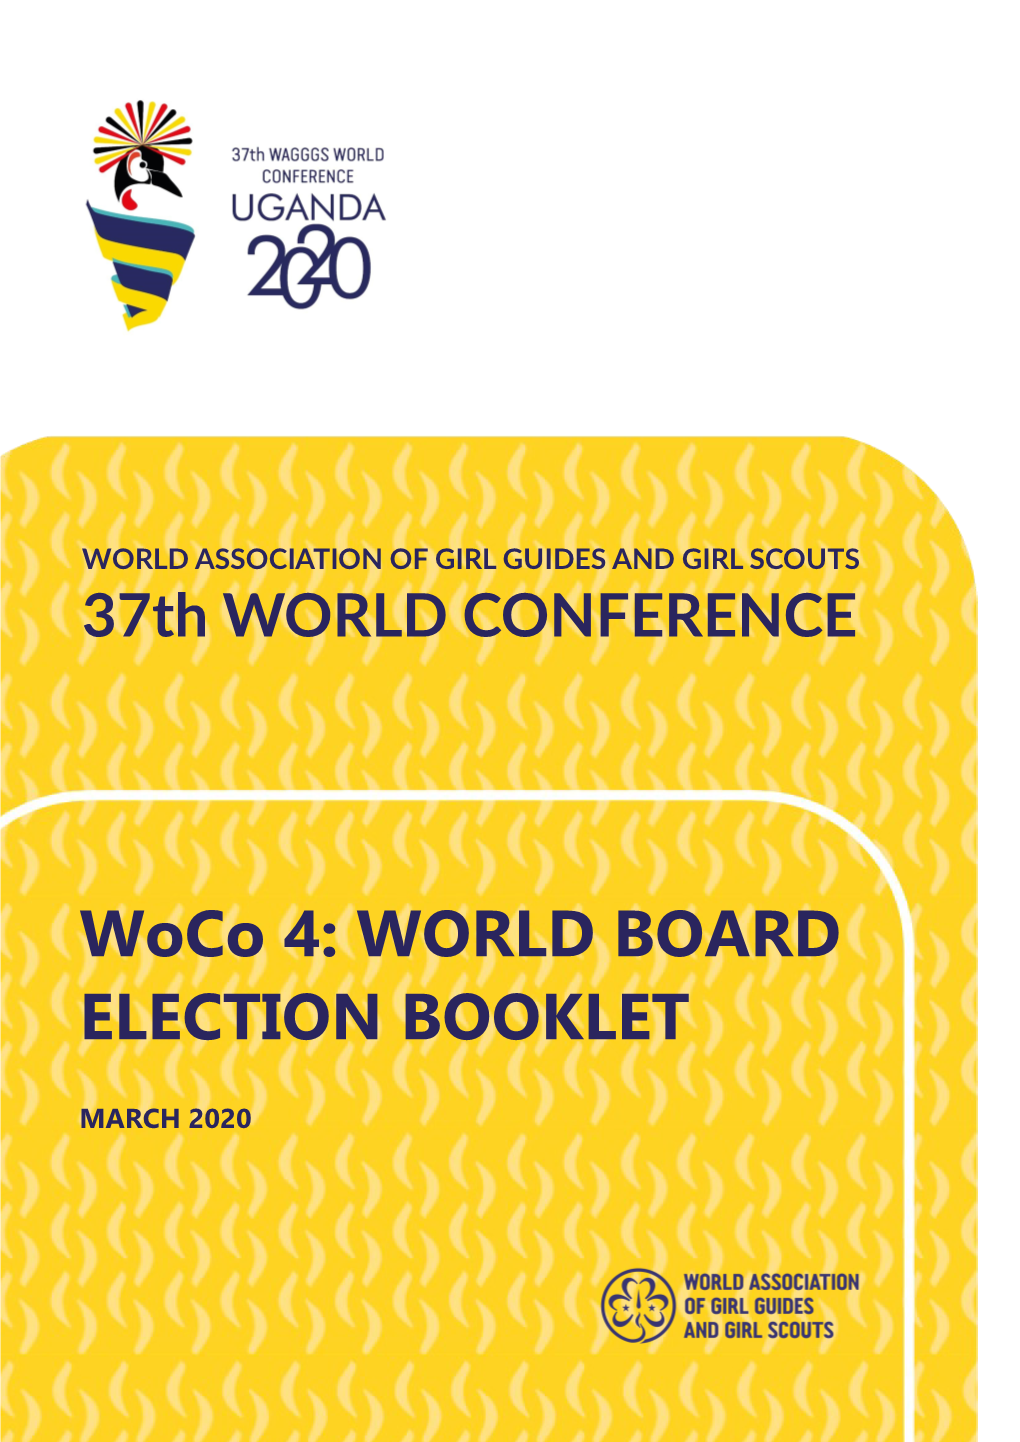 Woco 4: WORLD BOARD ELECTION BOOKLET